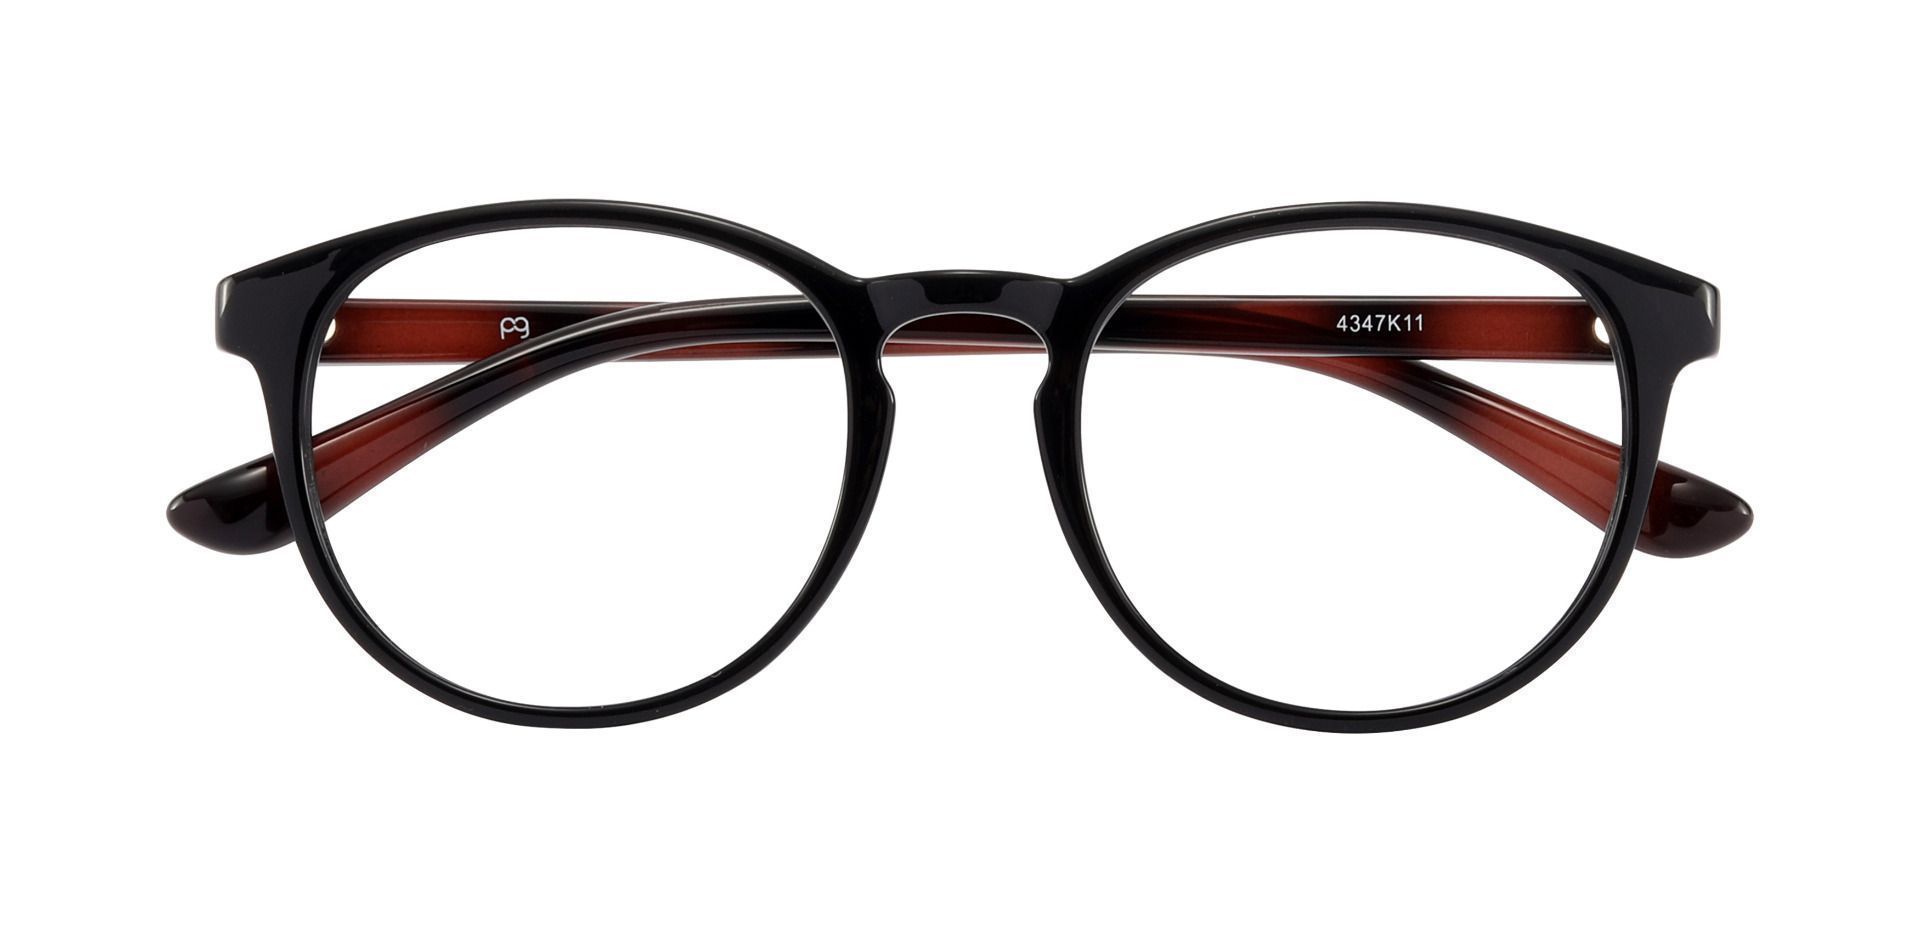 Clarita Oval Reading Glasses - Black